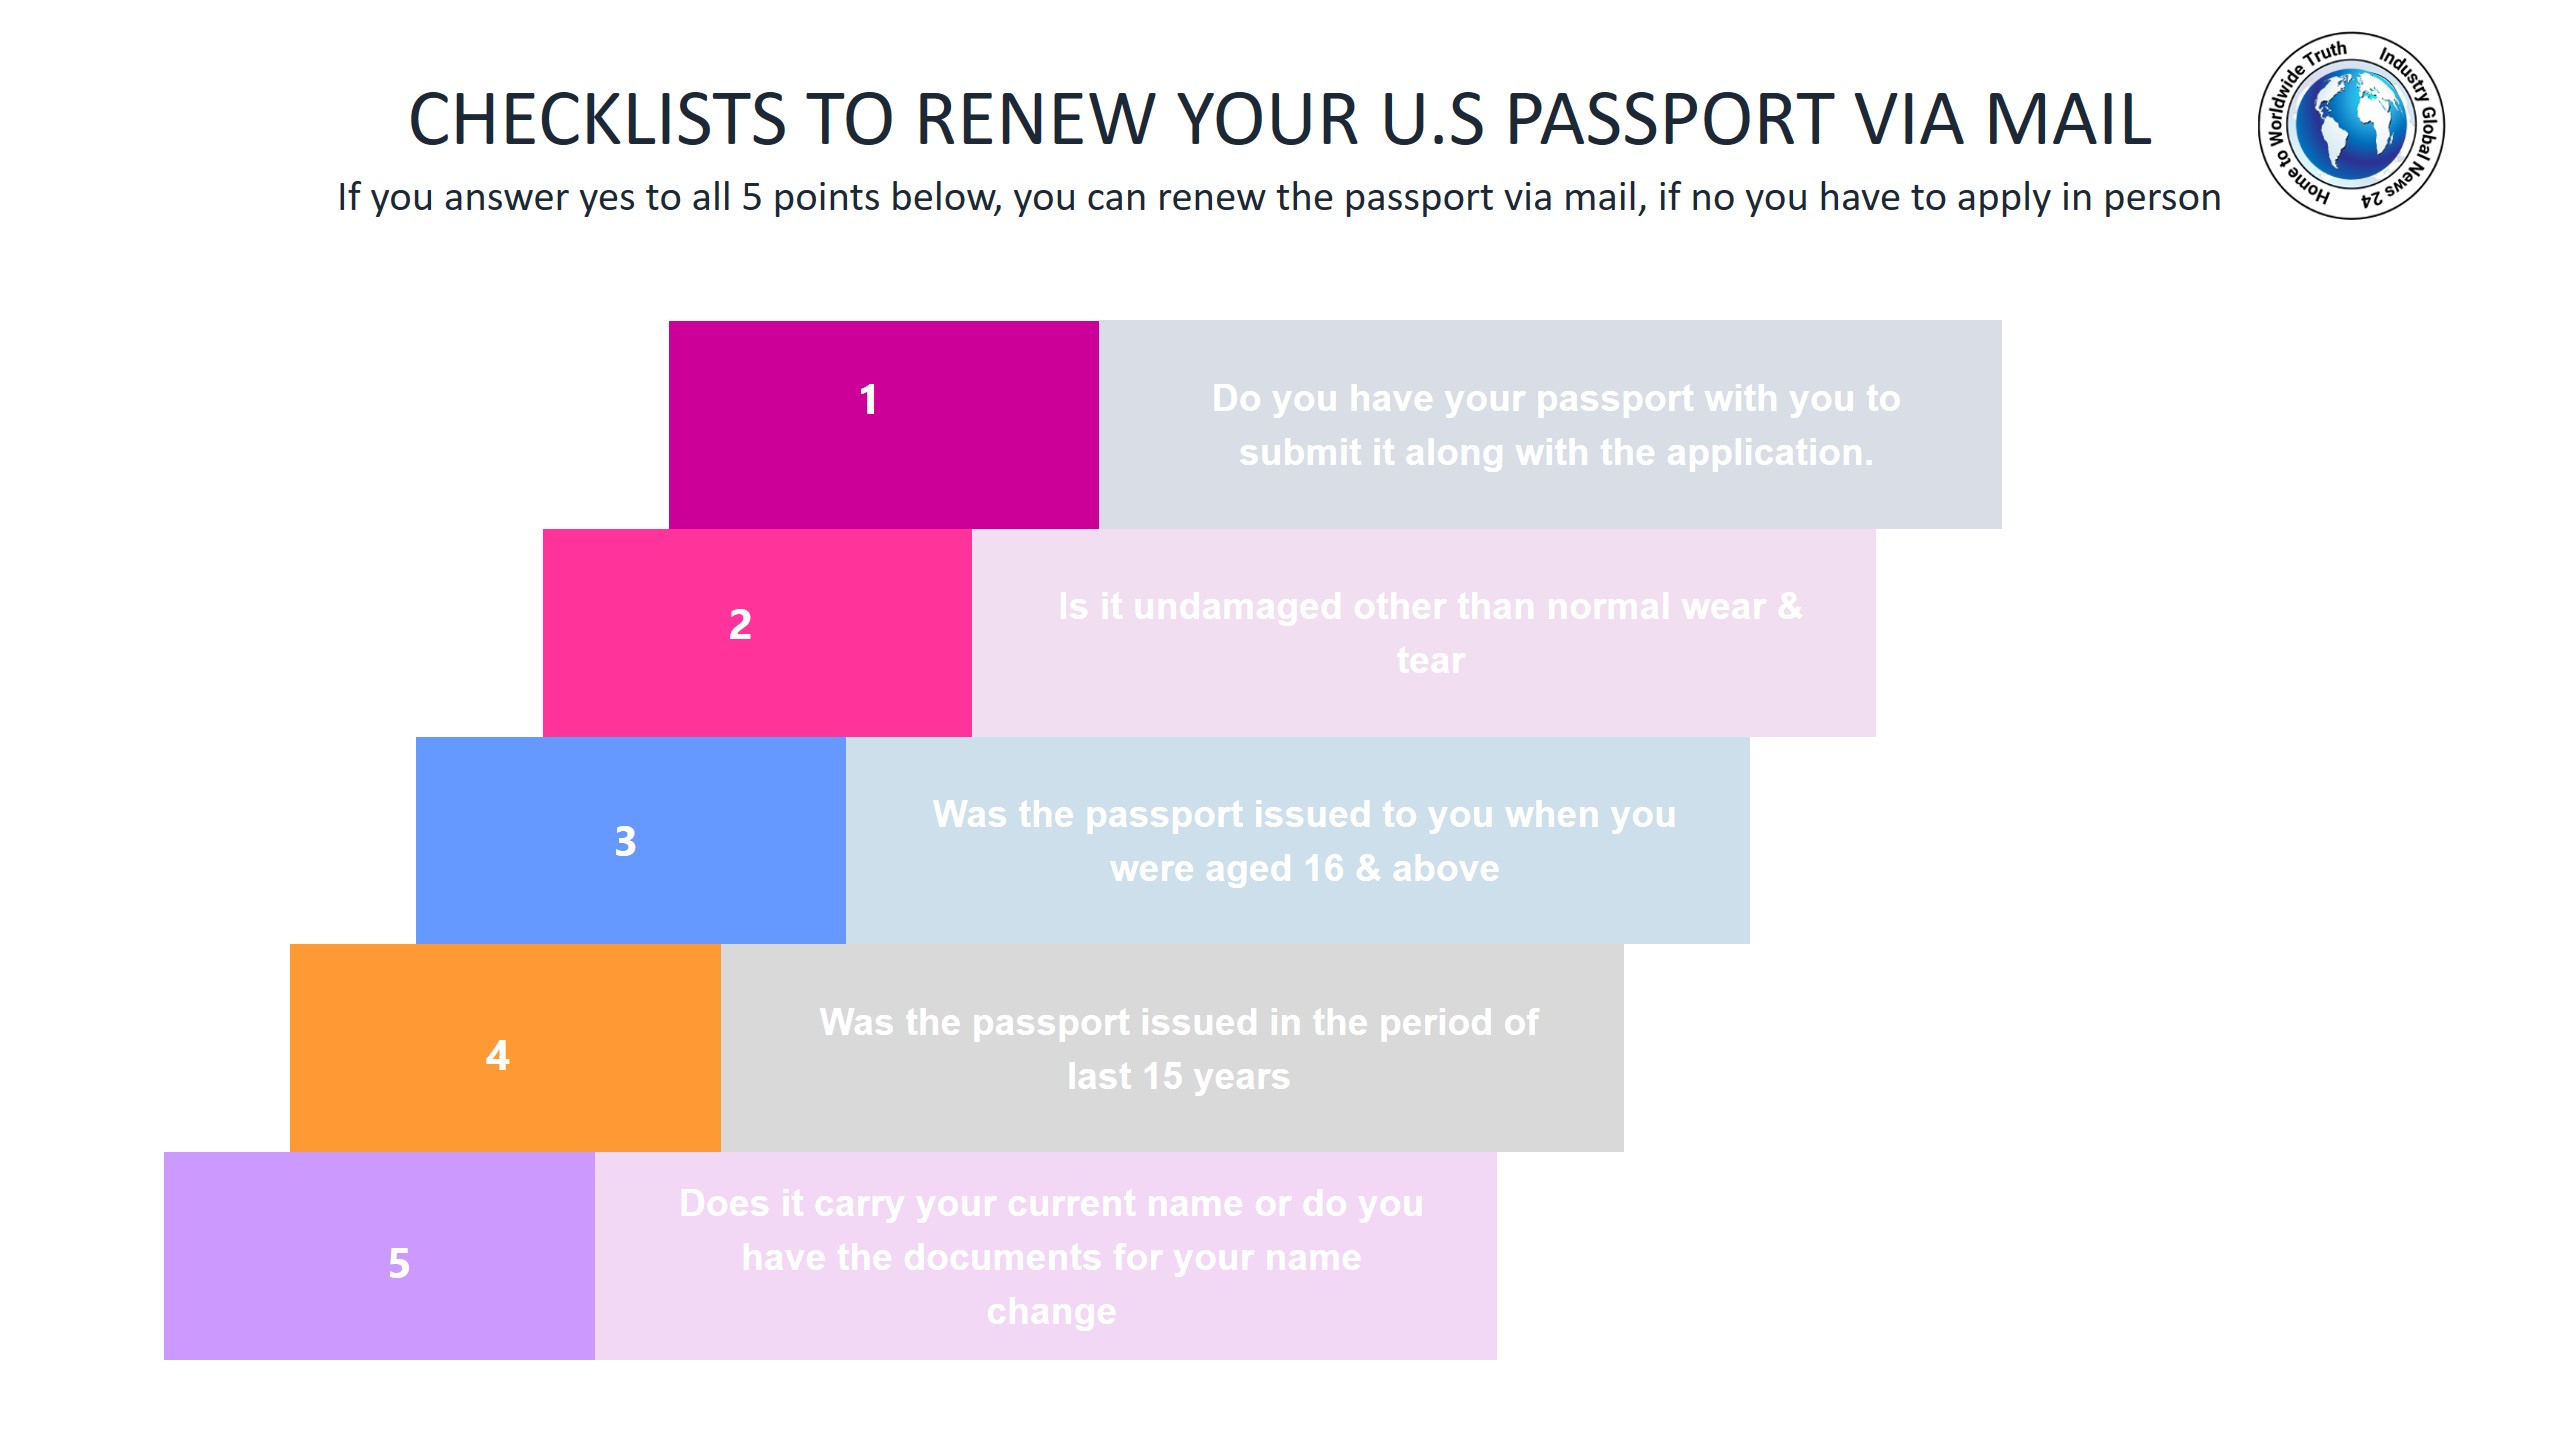 Checklists to renew your U.S passport via mail